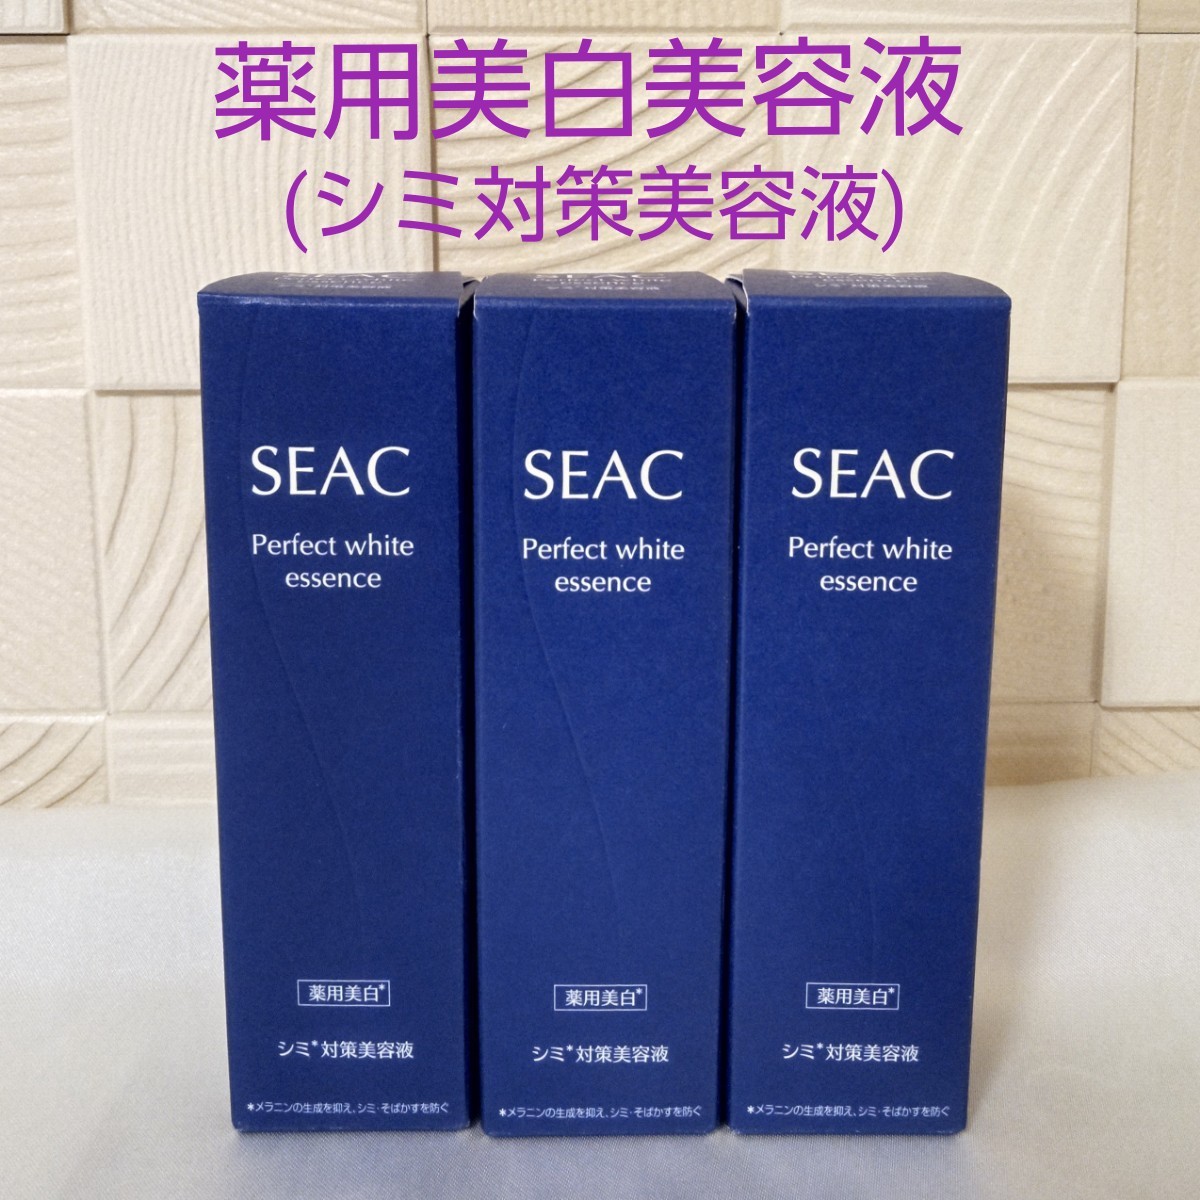 SEAC シーク 薬用美白美容液  シミ対策美容液  (25mL×3)  世田谷食品  新品 未開封  